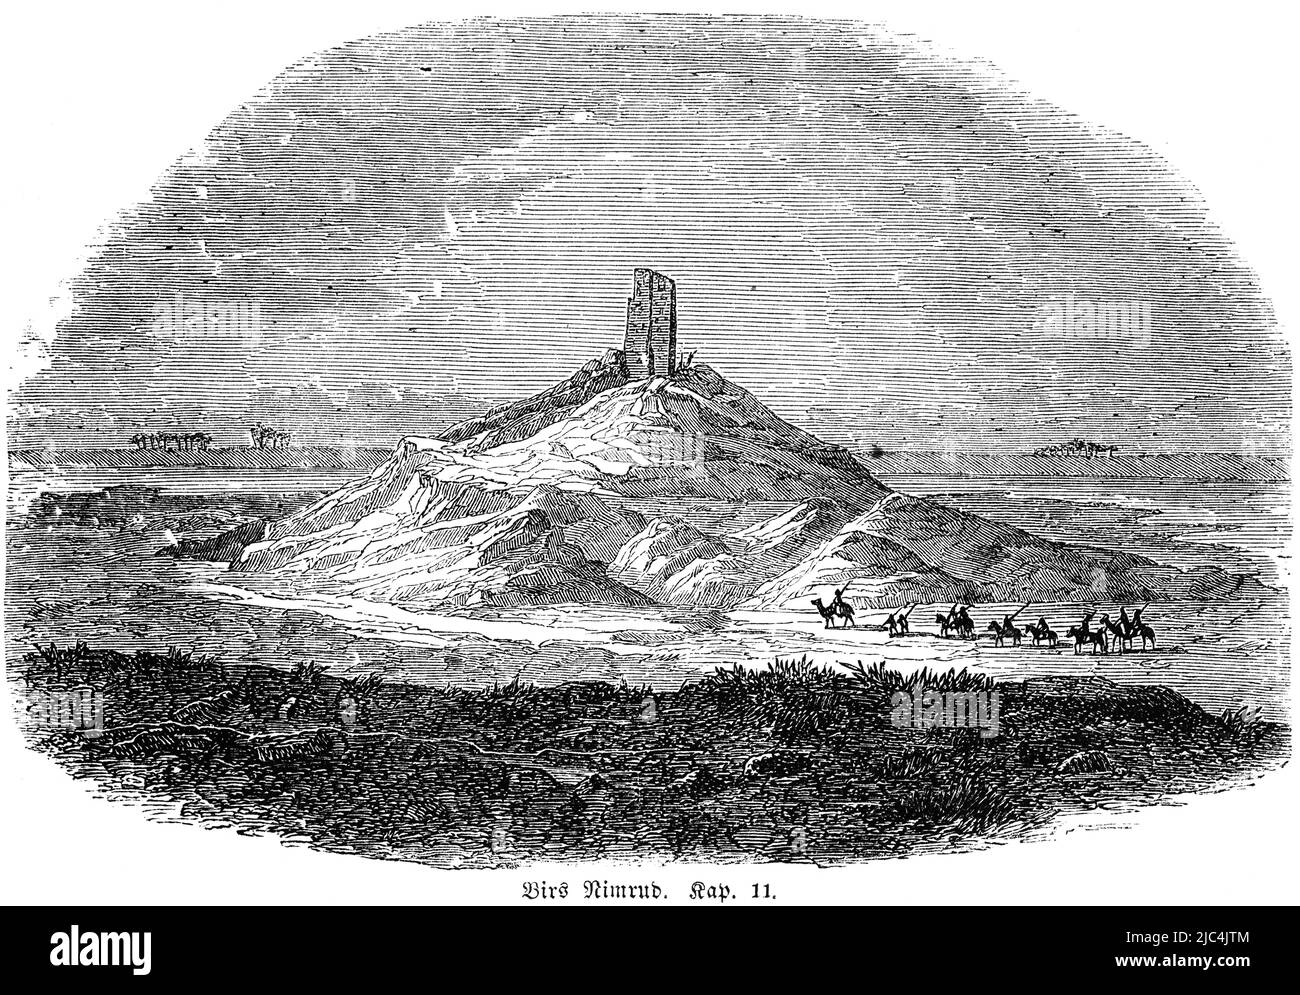 Birs Numrud, ruin, disputed remains Tower of Babylon, hill, spire, tower, caravan, landscape, Babylonia, Borsippa, Mesopotamia, Iraq, Moses, Bible Stock Photo